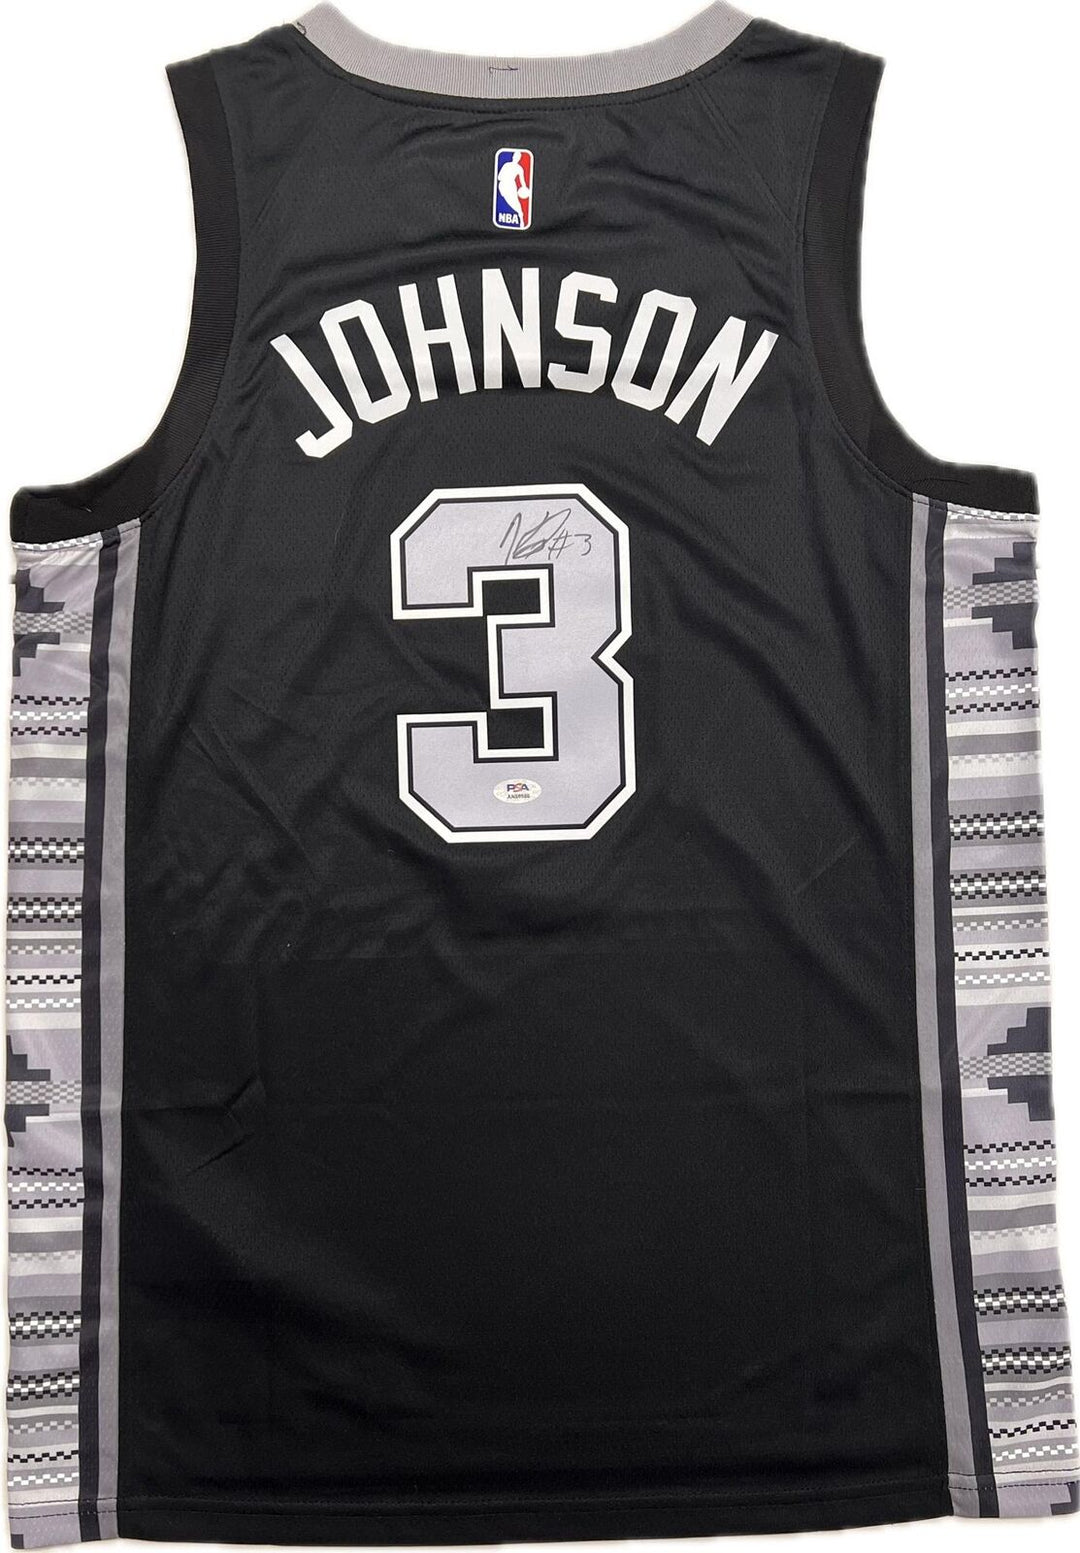 Keldon Johnson signed jersey PSA San Antonio Spurs Autographed Image 1